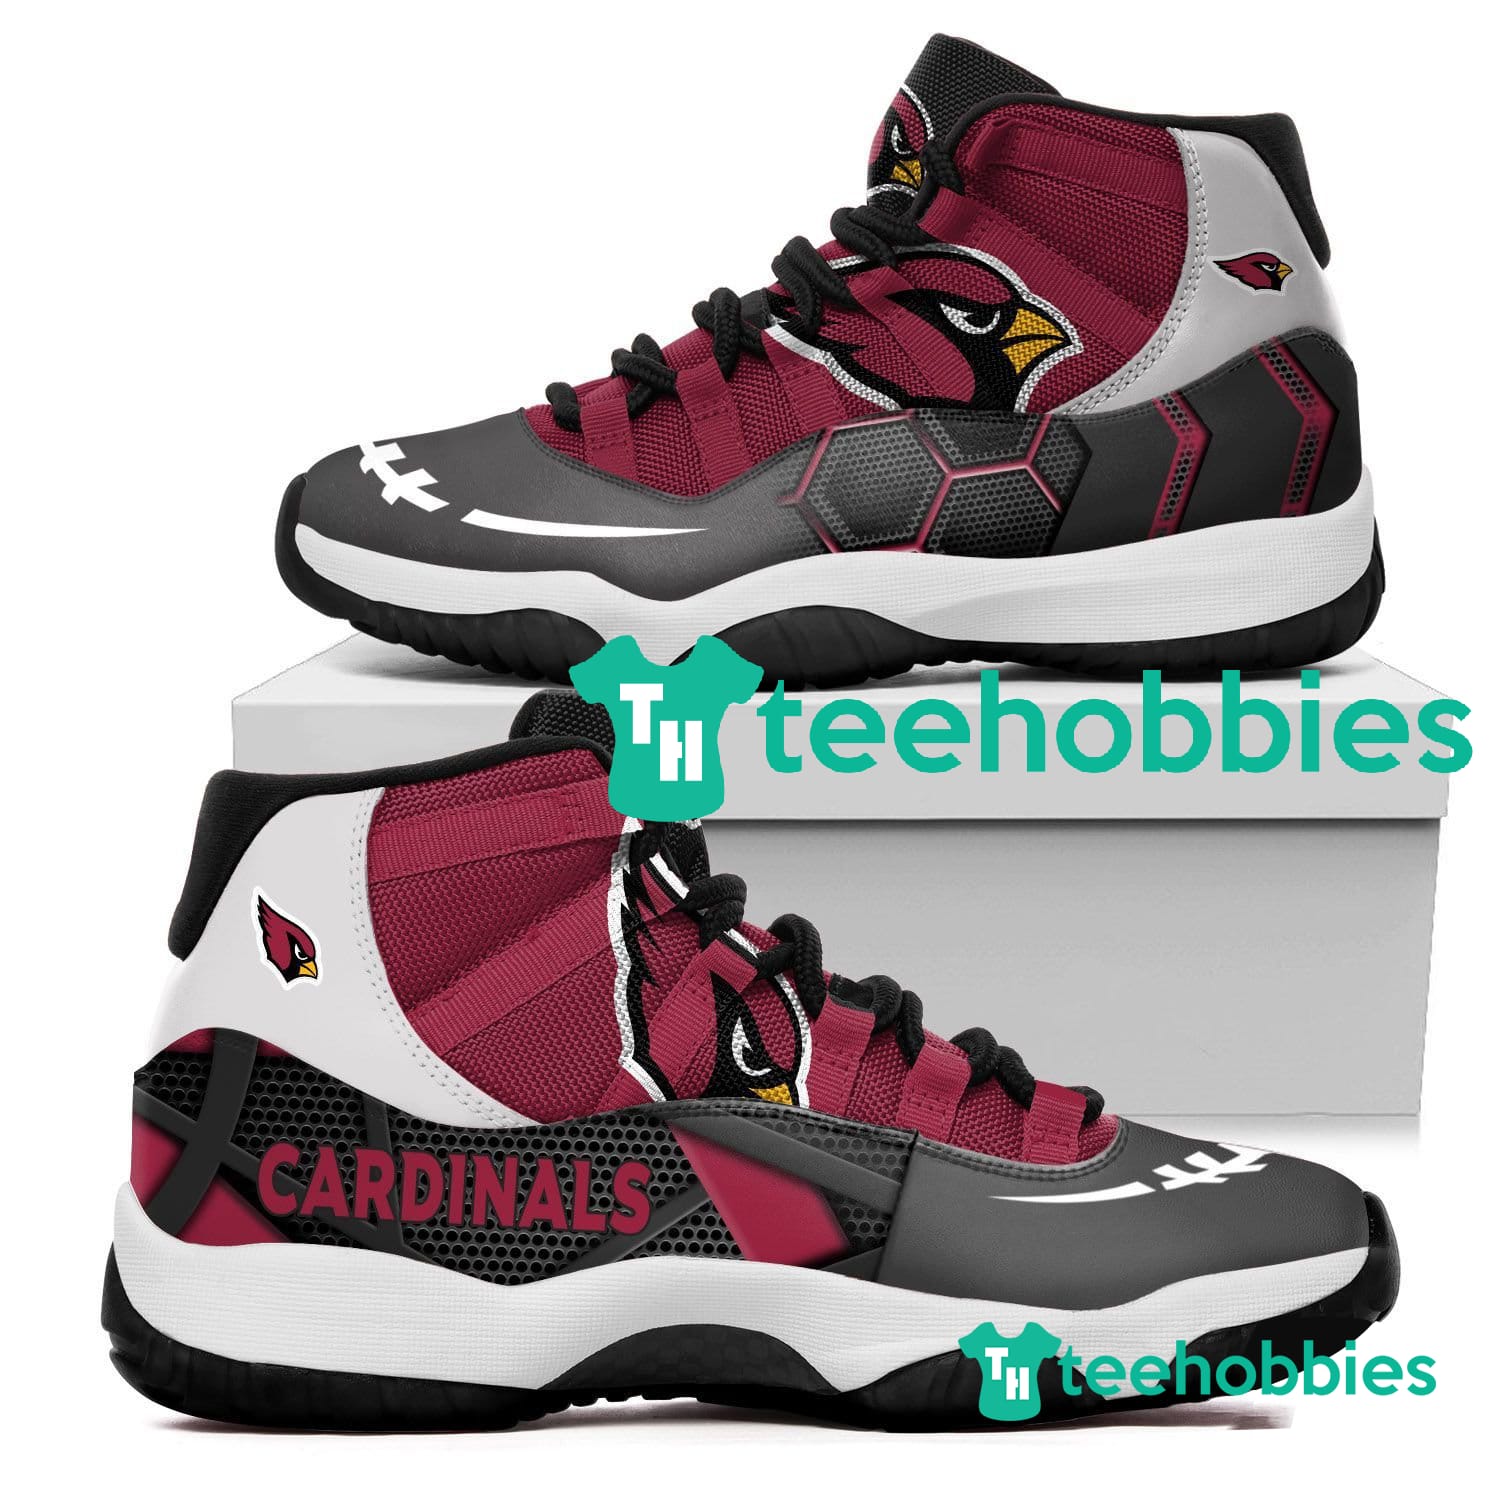 Arizona Cardinals New Air Jordan 11 Sneakers Shoes Concord Bred Retro Design Men Women Product photo 1